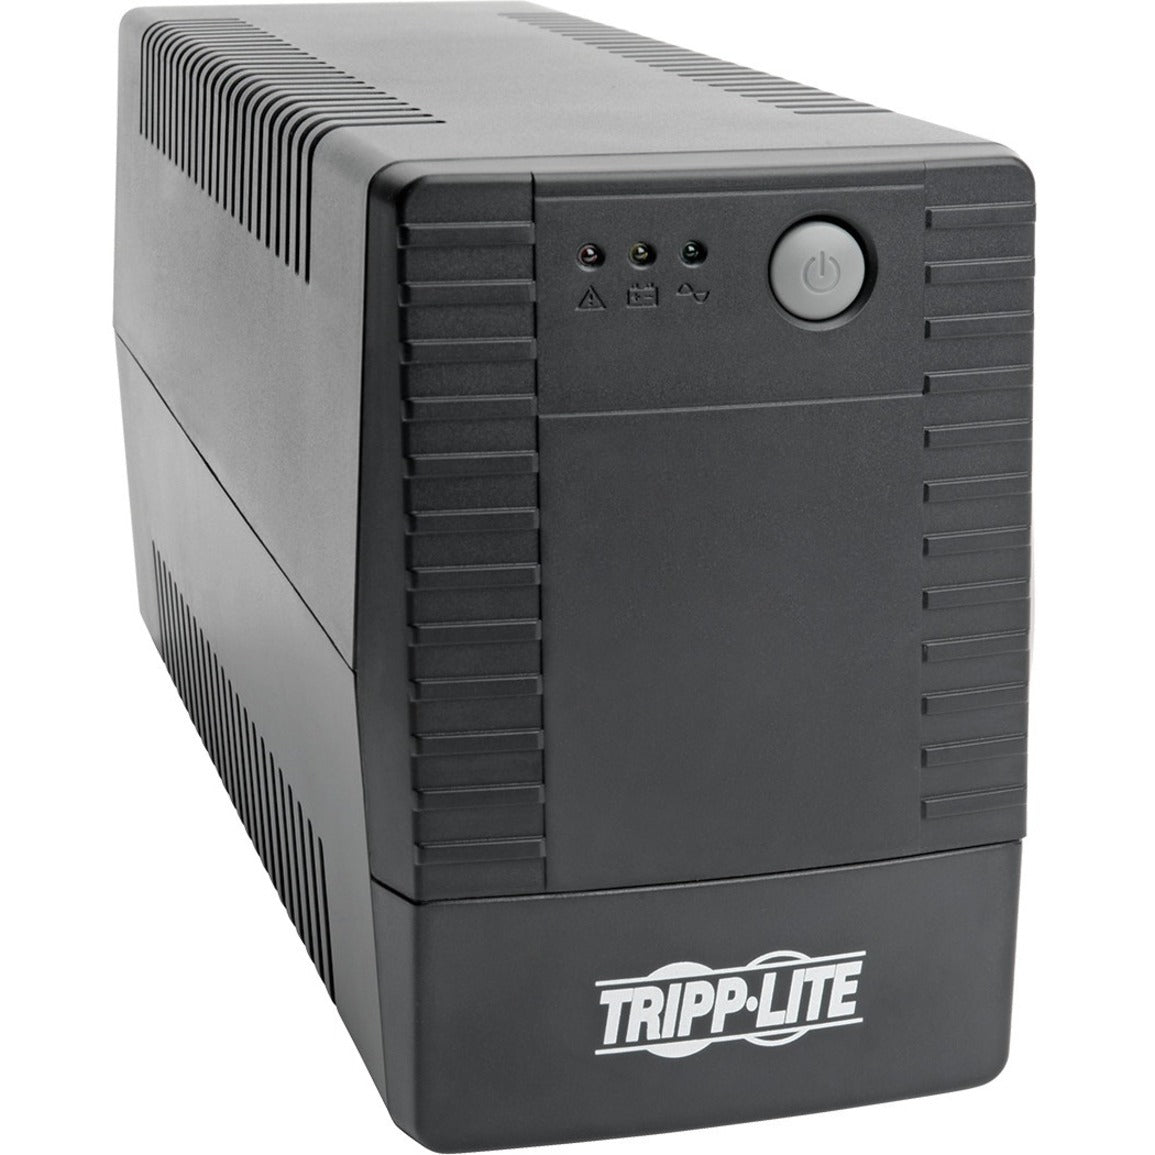 Tripp Lite VS450T General Purpose UPS, 450VA Desktop/Tower, 3-Year Warranty, Sine Wave